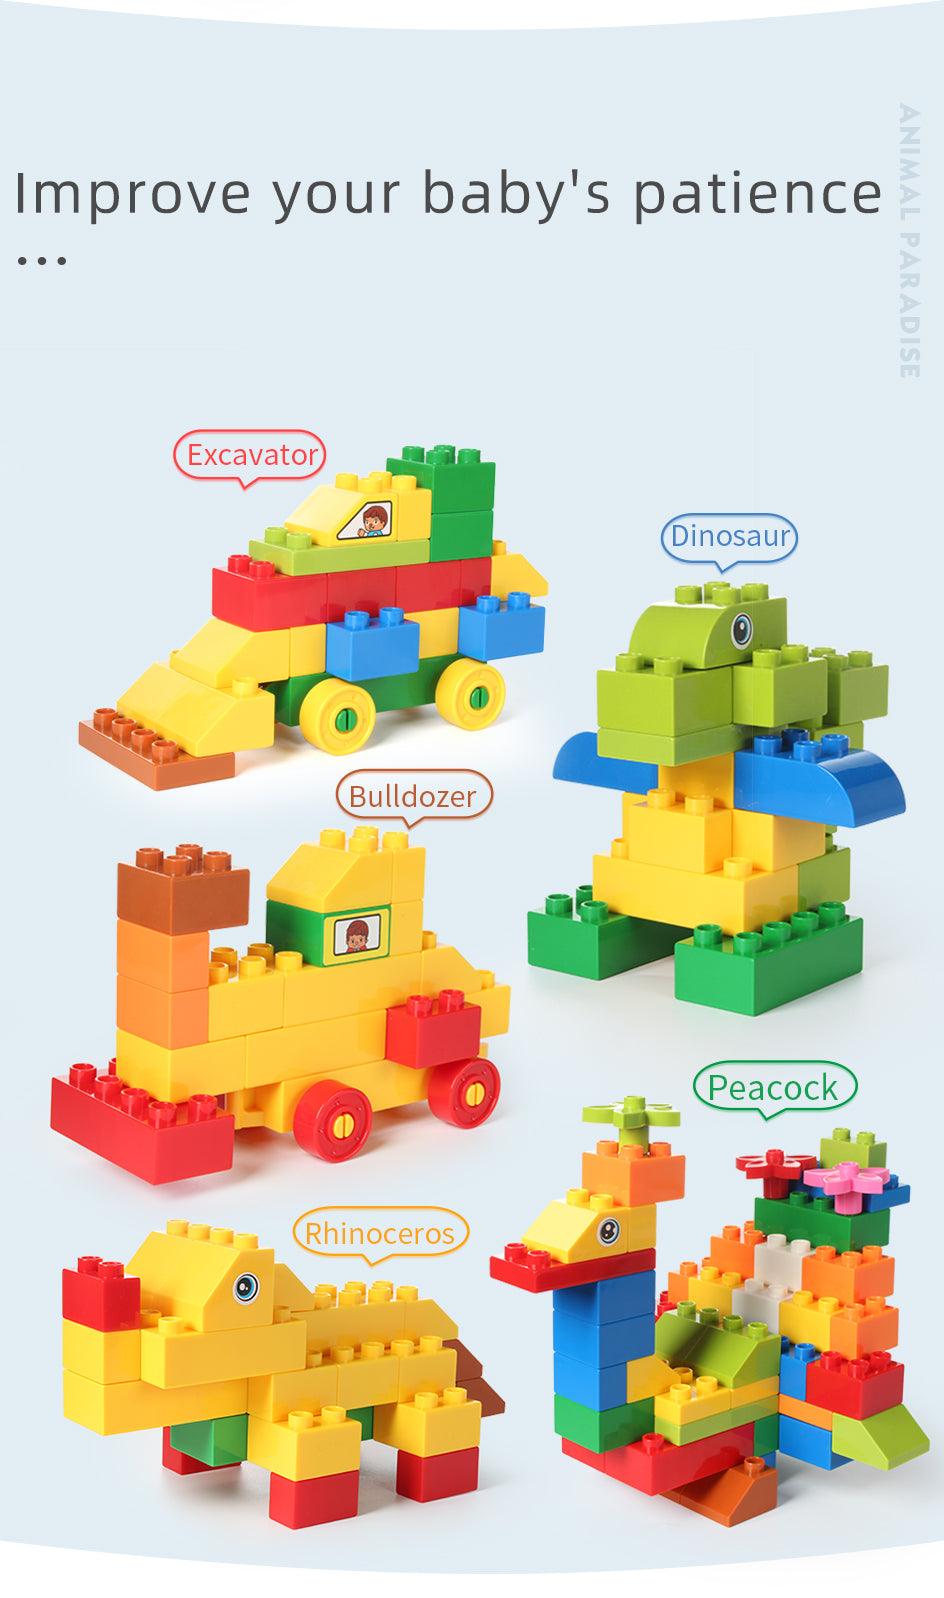 260PCS Building Blocks Stickers - Figurine Classic City Bricks Construction- Educational Toys For Children (8X2)